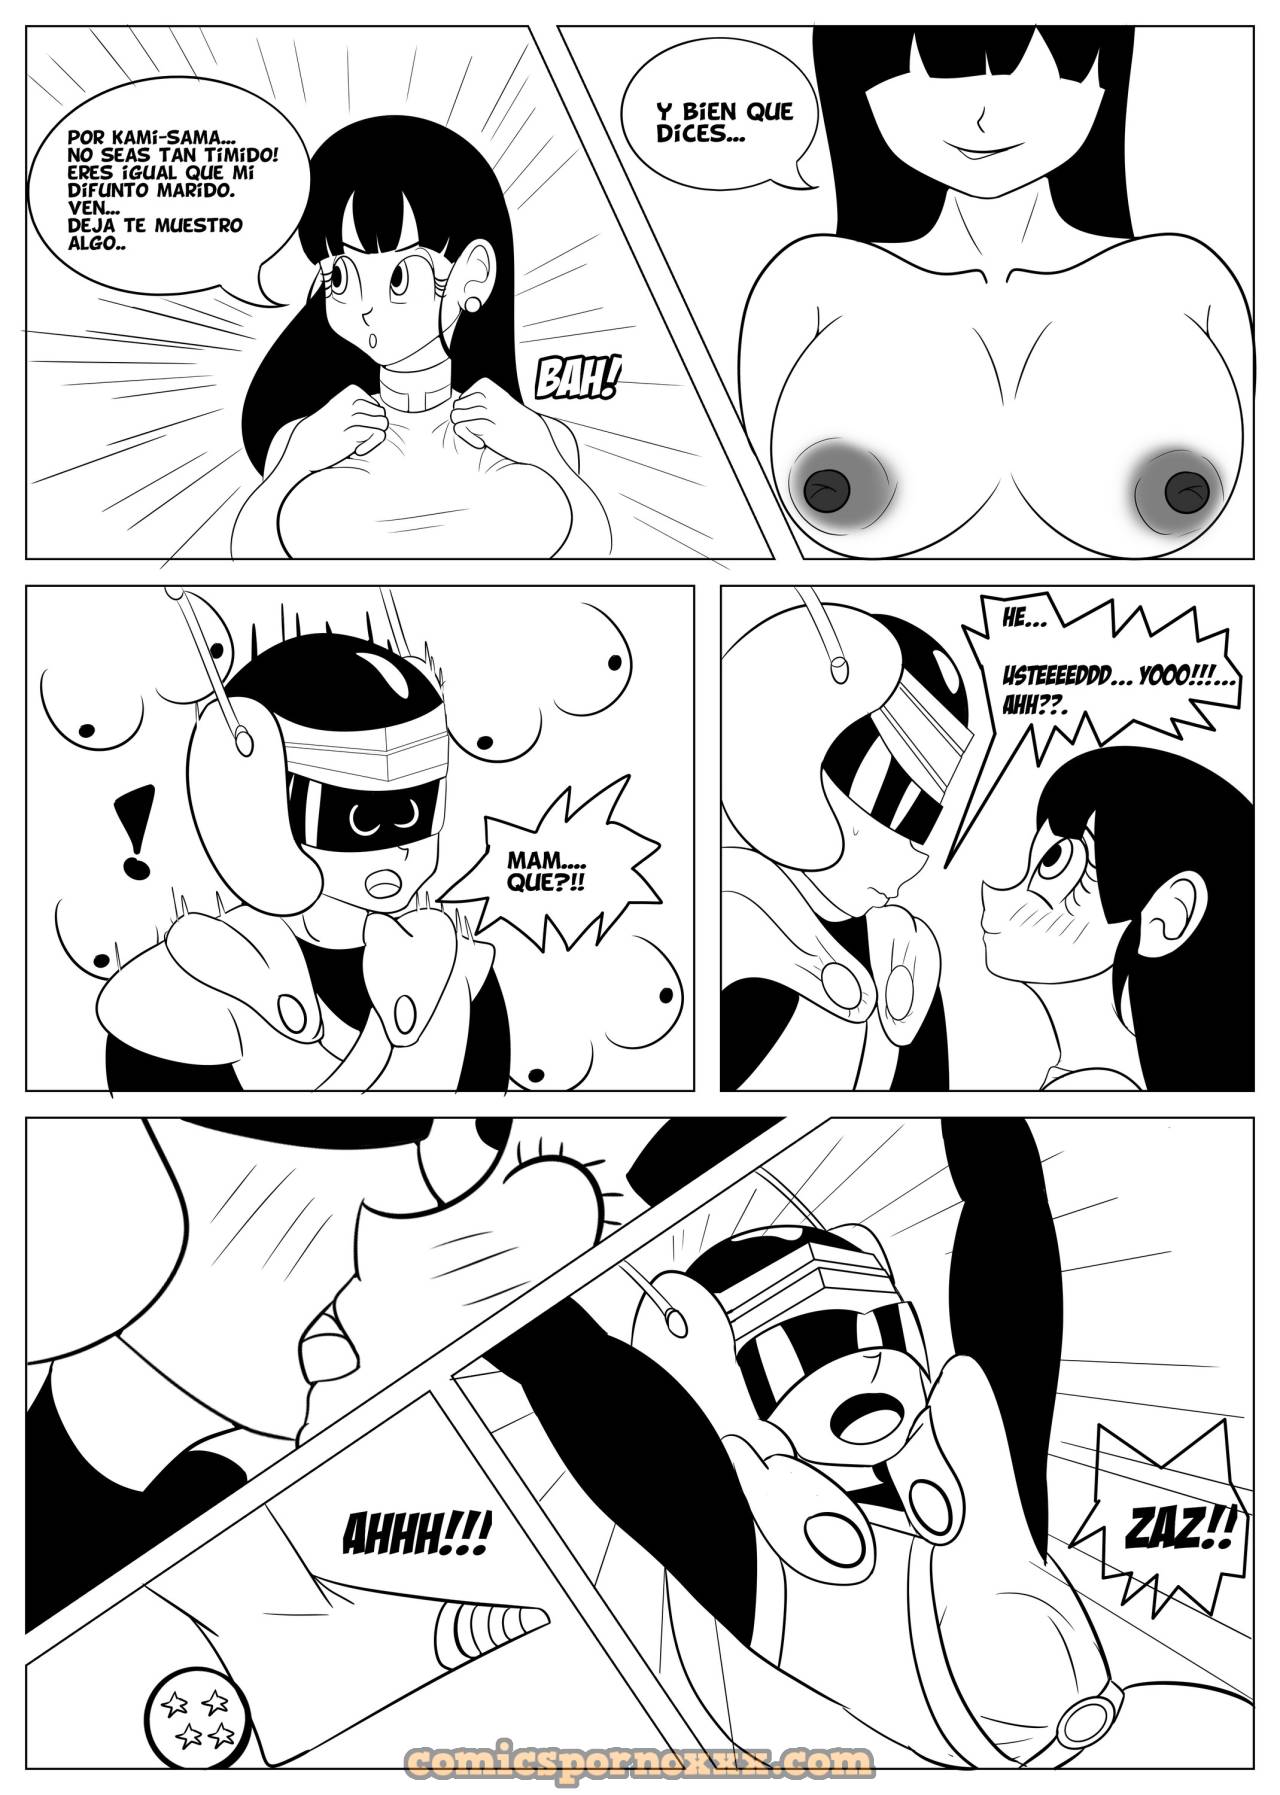 Malentendidos Familiares - 6 - Comics Porno - Hentai Manga - Cartoon XXX